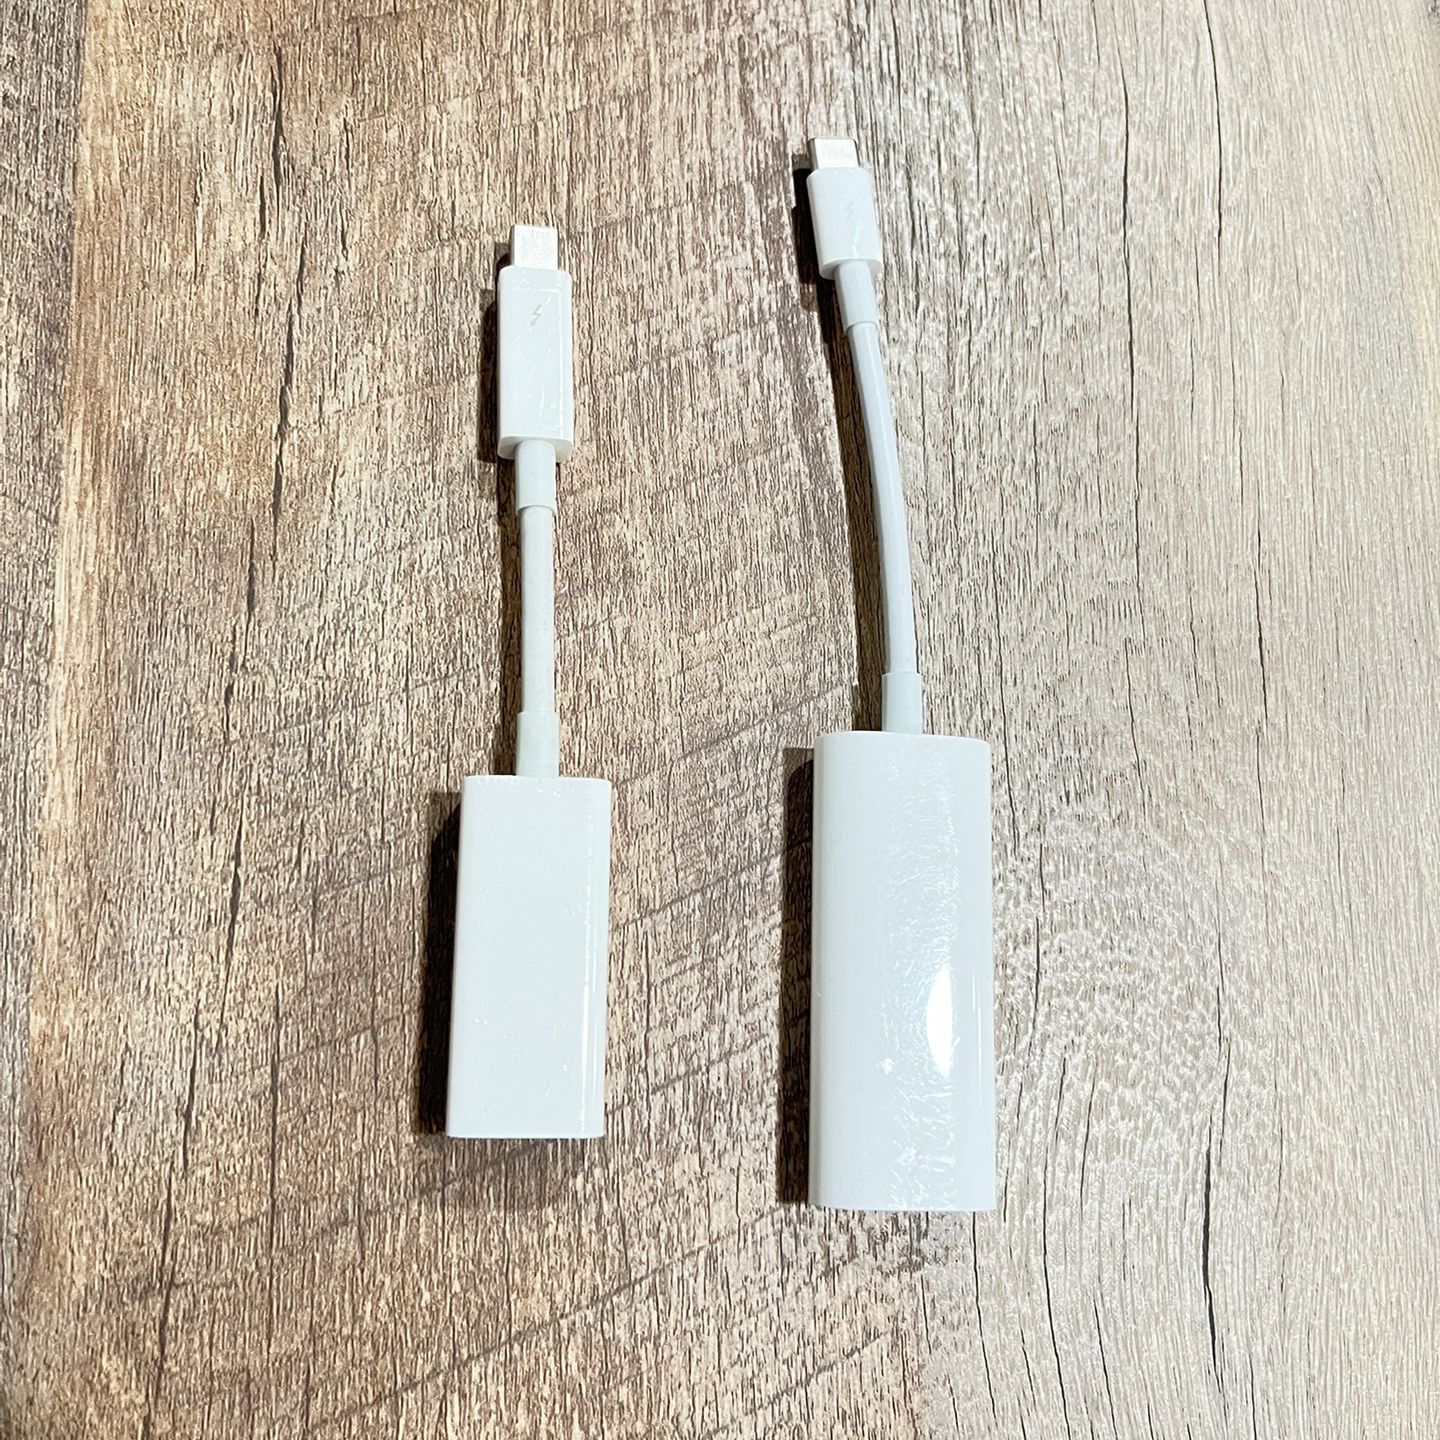 Apple - Thunderbolt 3 (USB-C) to Thunderbolt 2 Adapter &  Apple Thunderbolt to FireWire